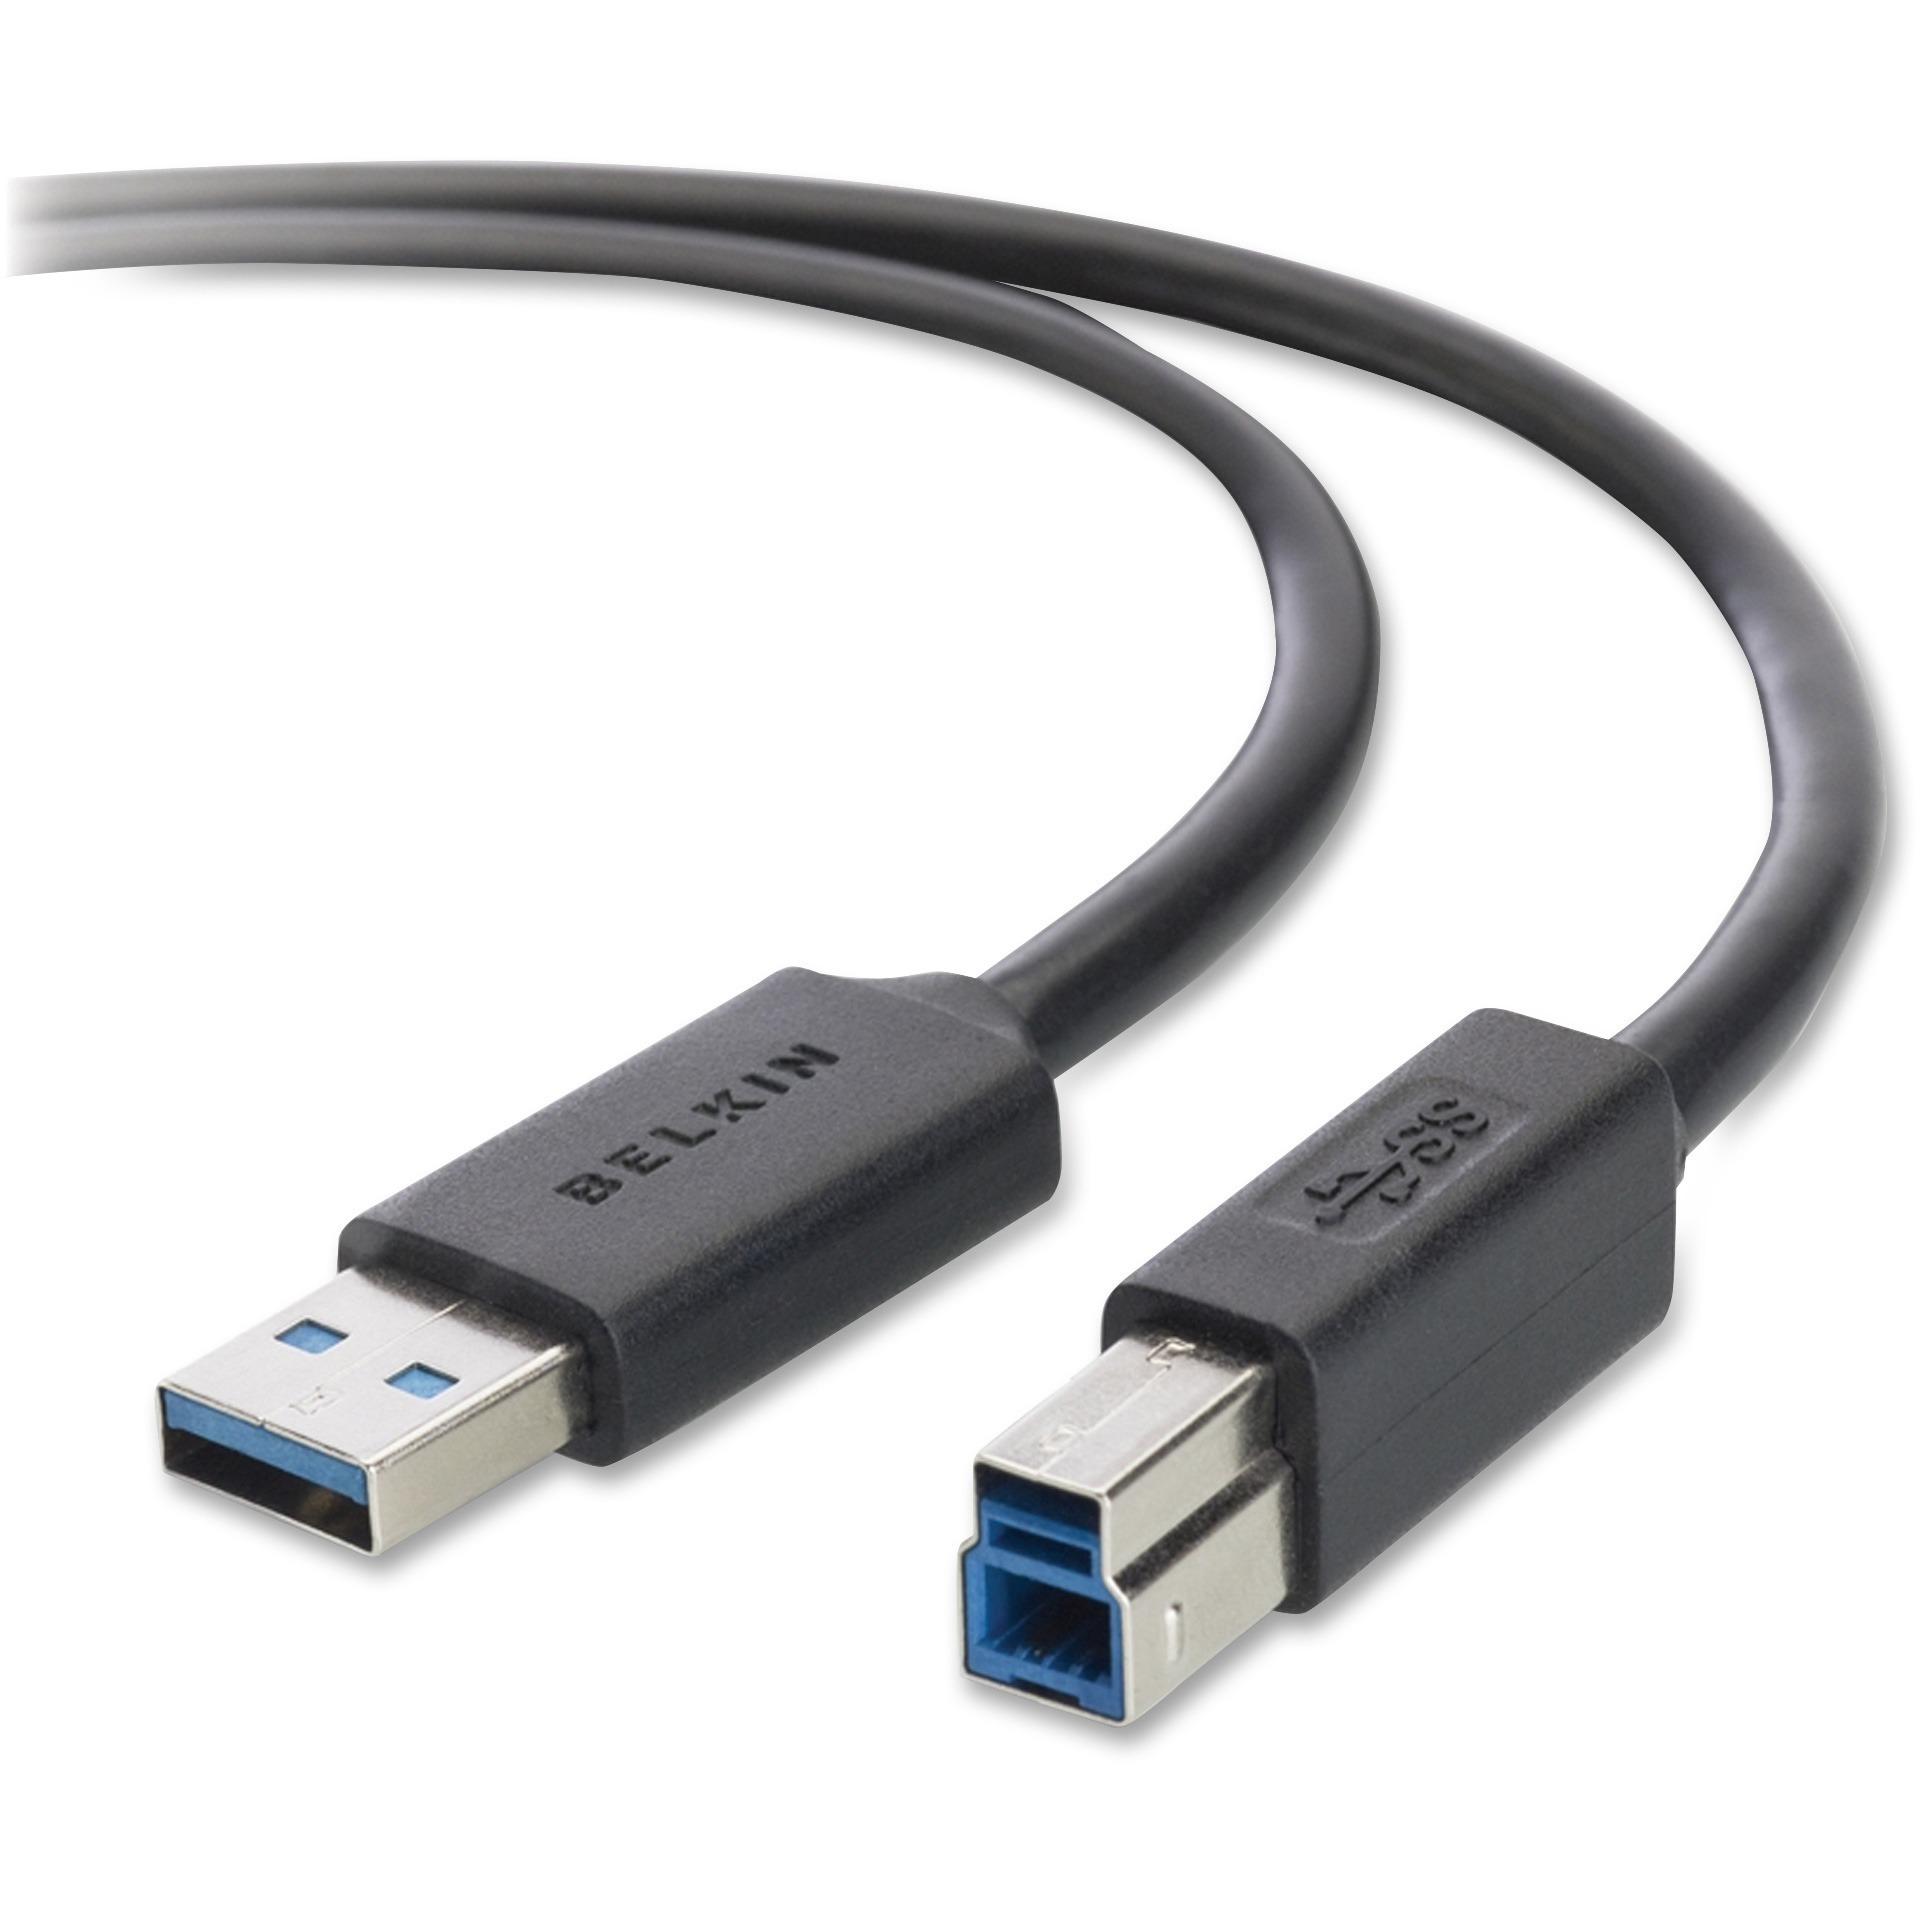 Belkin, BLKF3U159B10, SuperSpeed USB 3.0 Cable, 1 Each, Black - image 1 of 3